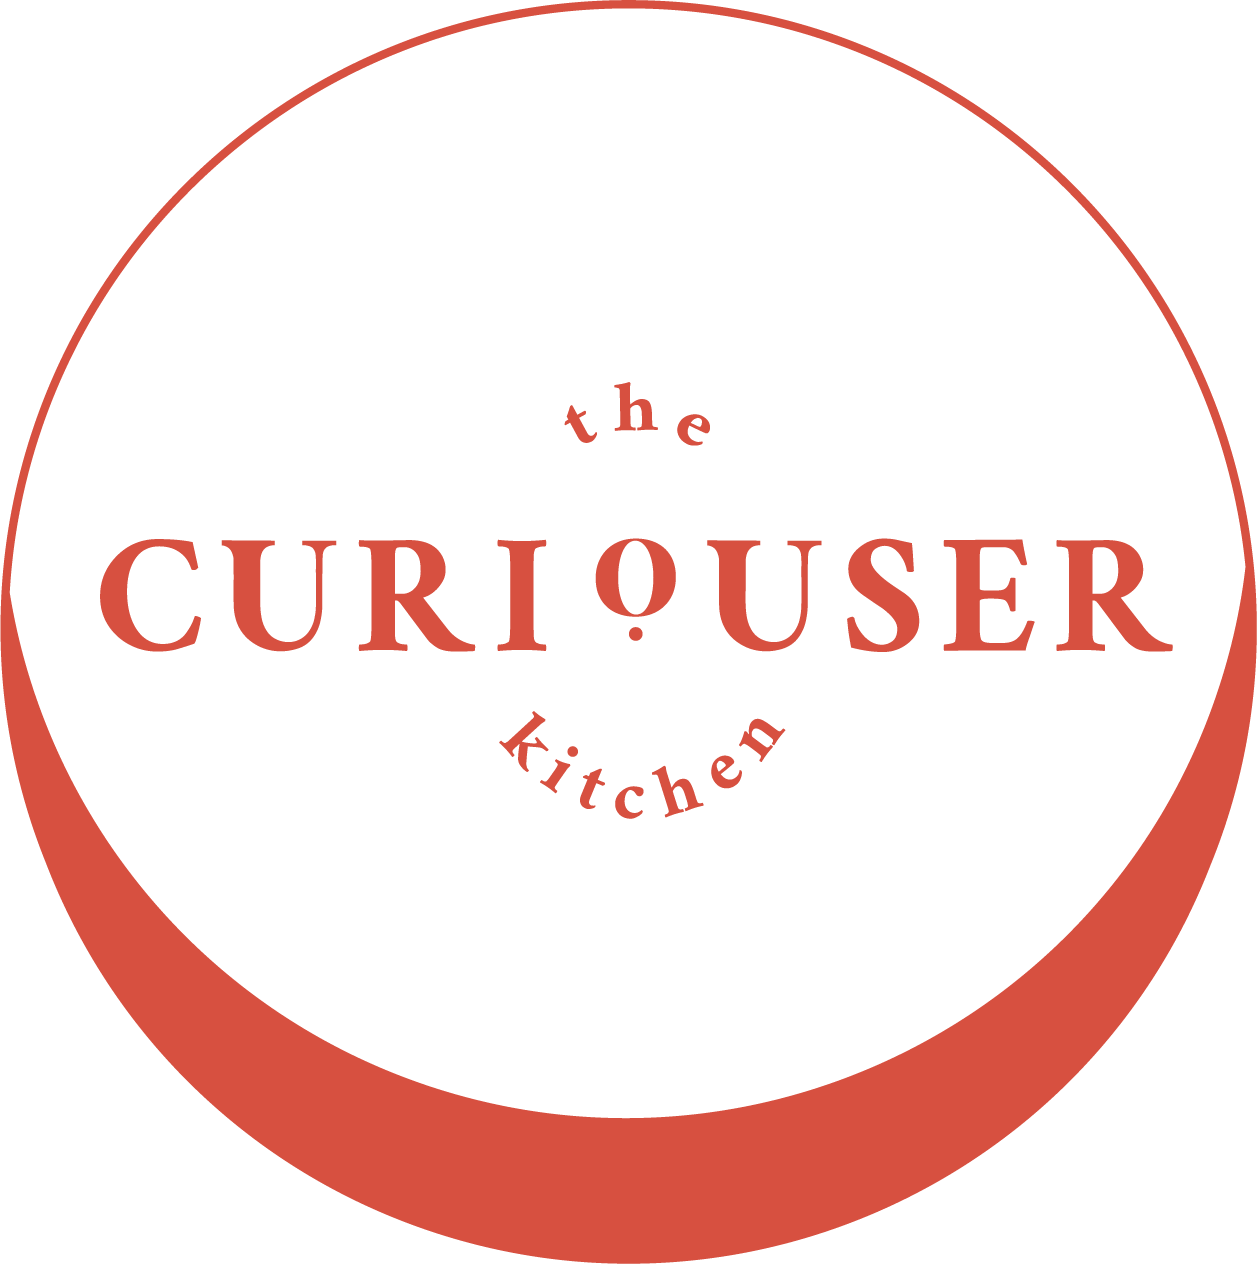 Curiouser Kitchen